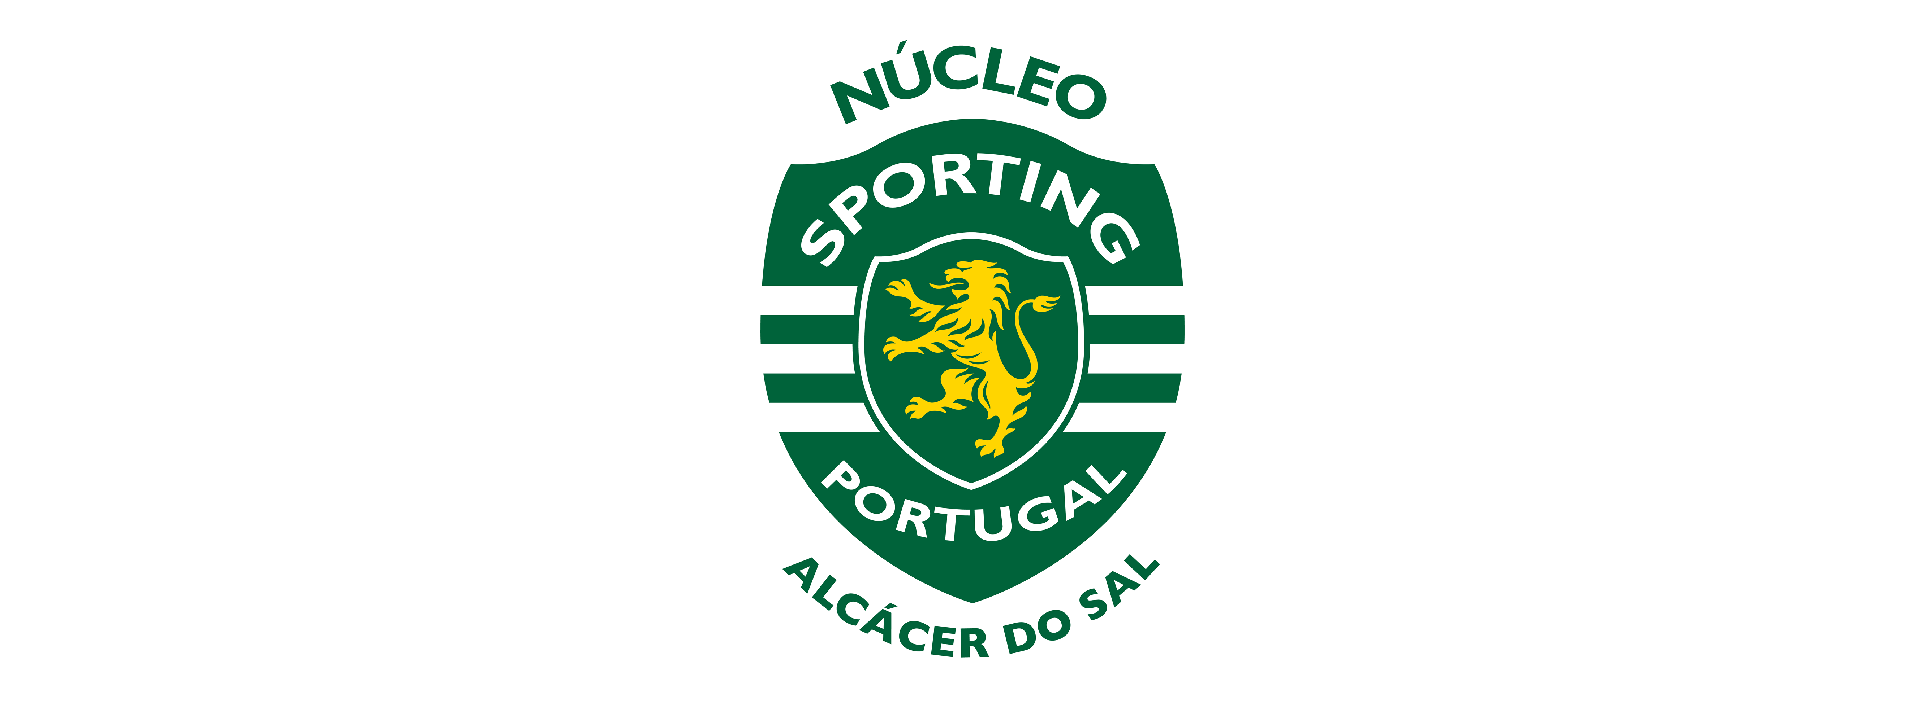 Núcleo do Sporting Clube de Portugal – Alcácer do Sal